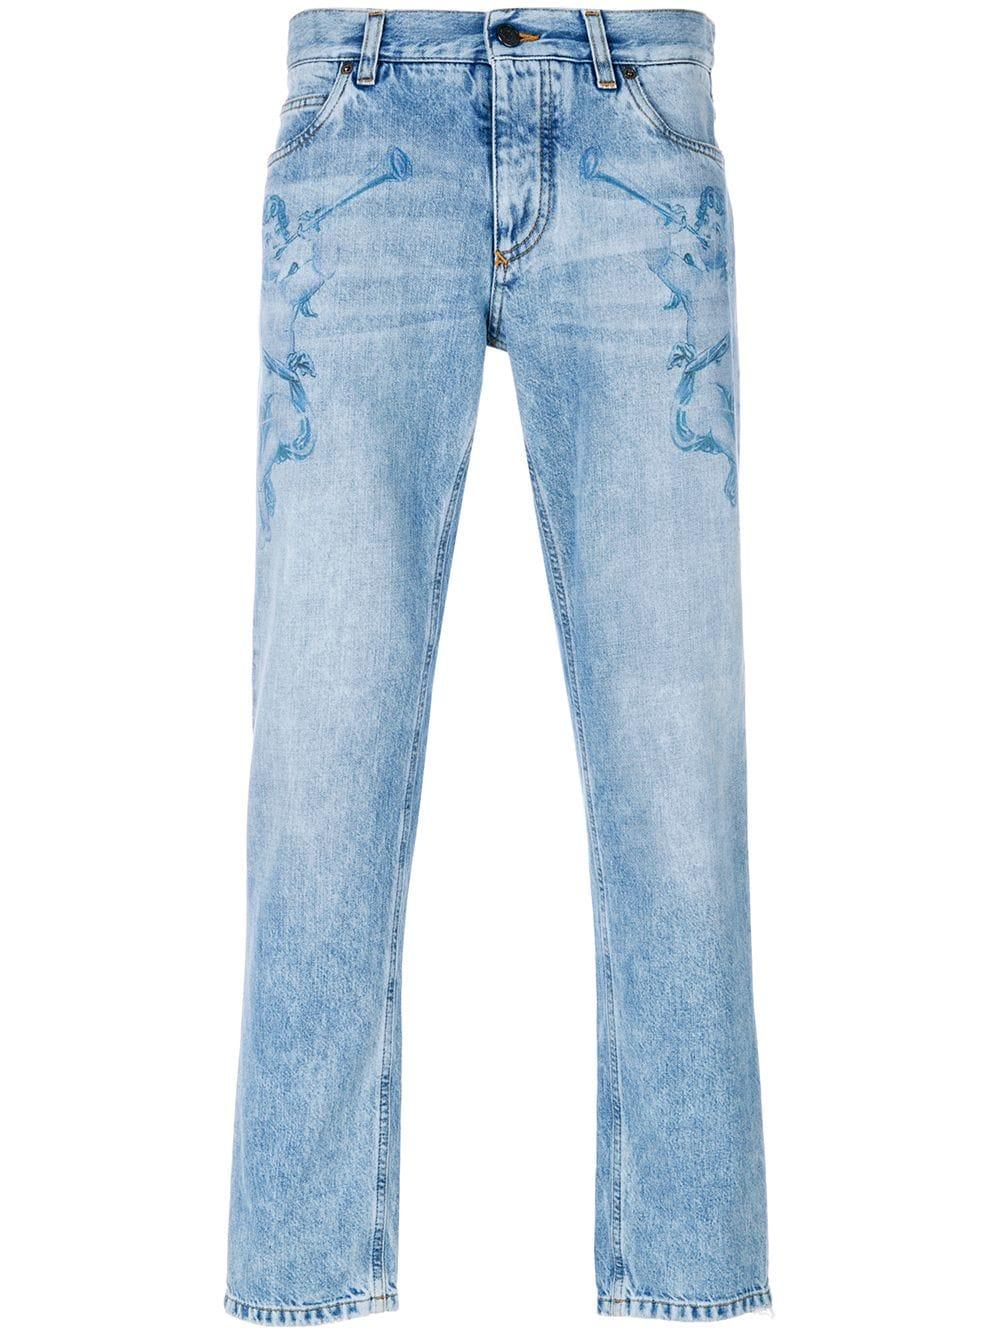 Dolce & Gabbana Denim Angel Print Jeans in Blue for Men - Lyst